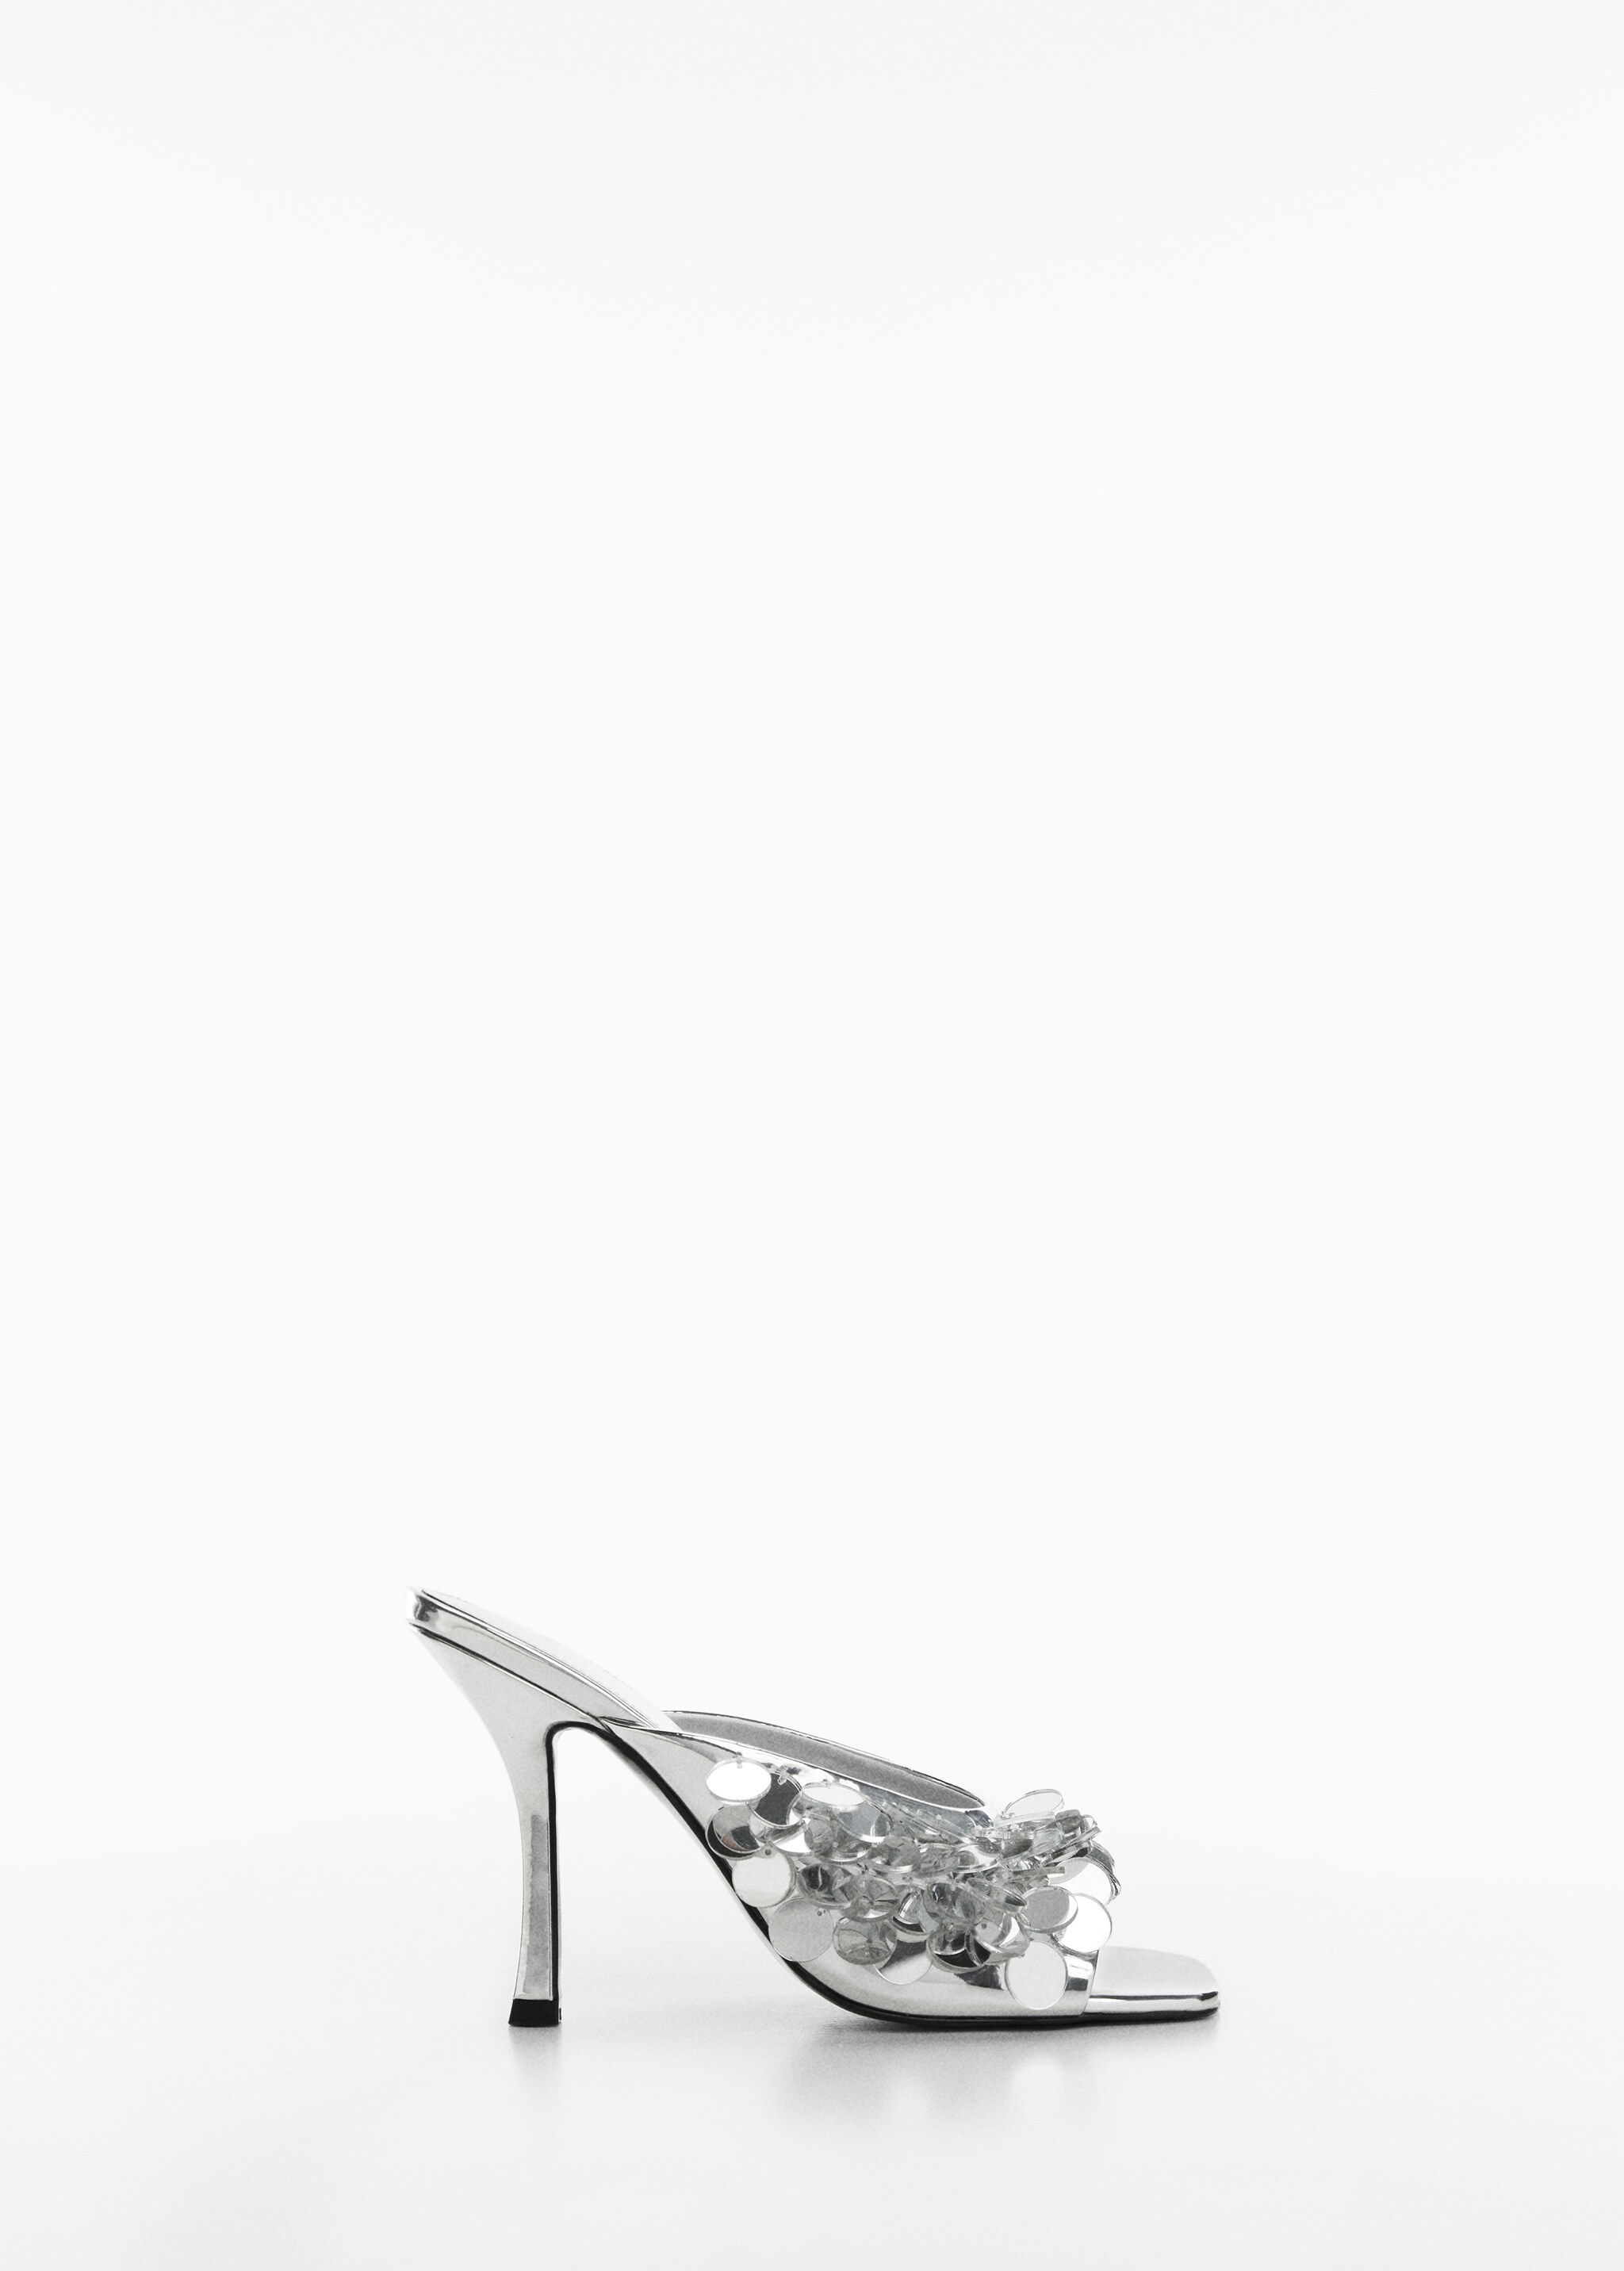 Sandale sa šljokicama i detaljem zrcala - Artikl bez modela